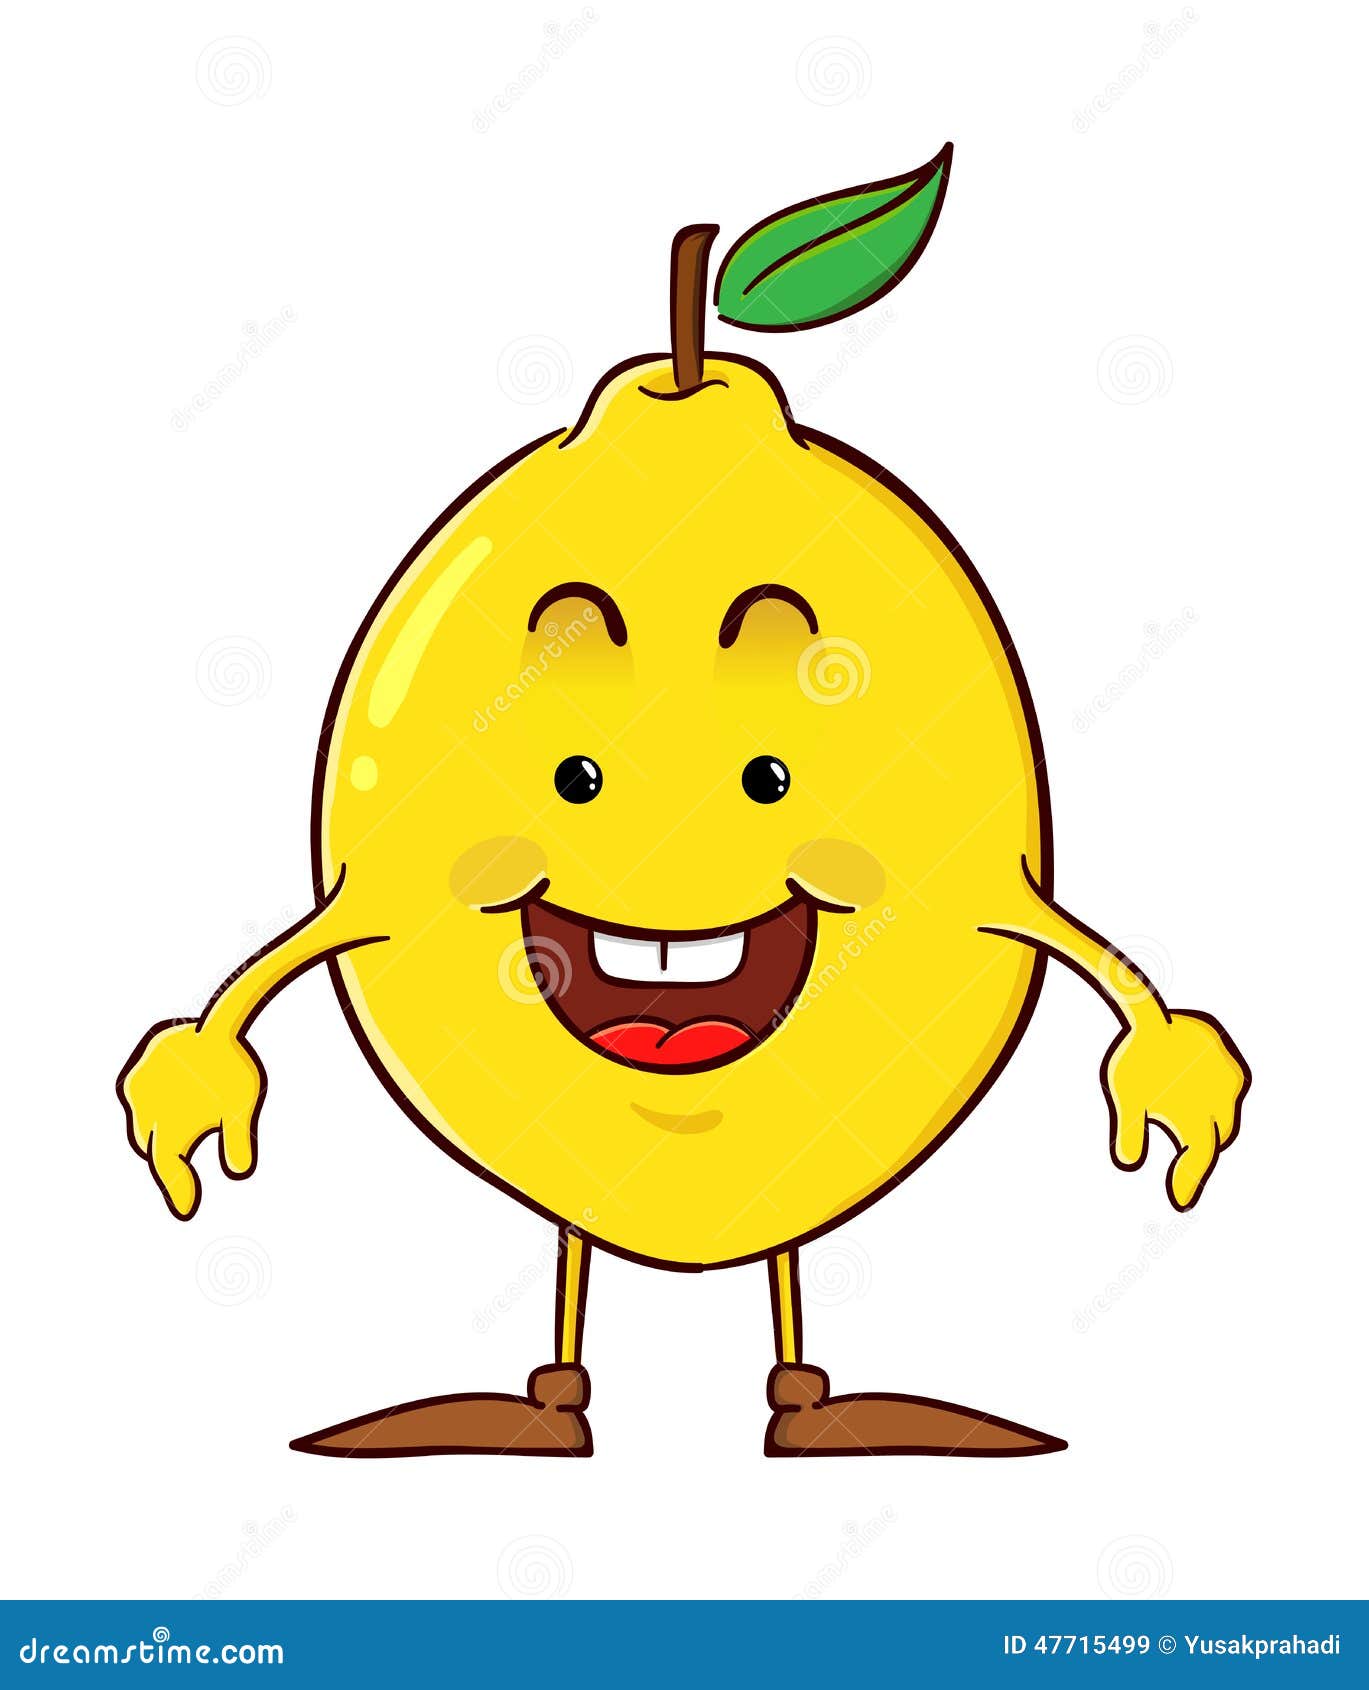 Lemon Cartoon Character Stock Vector - Image: 47715499